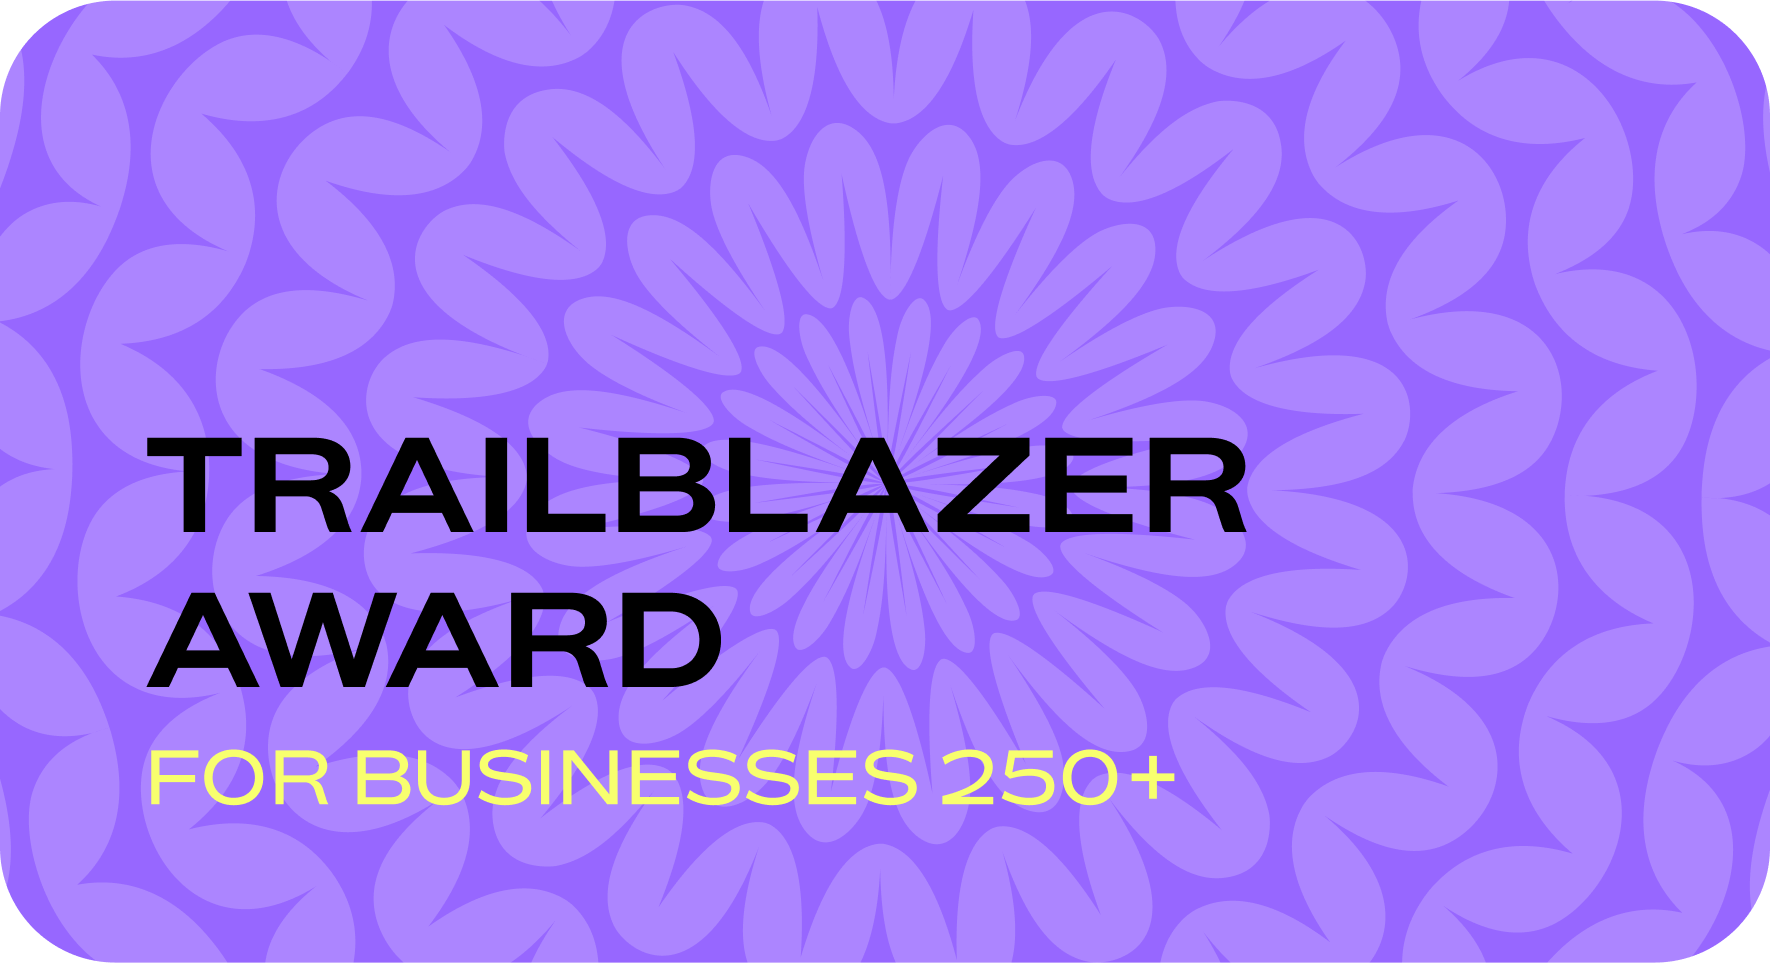 Trailblazer award for businesses 250+.